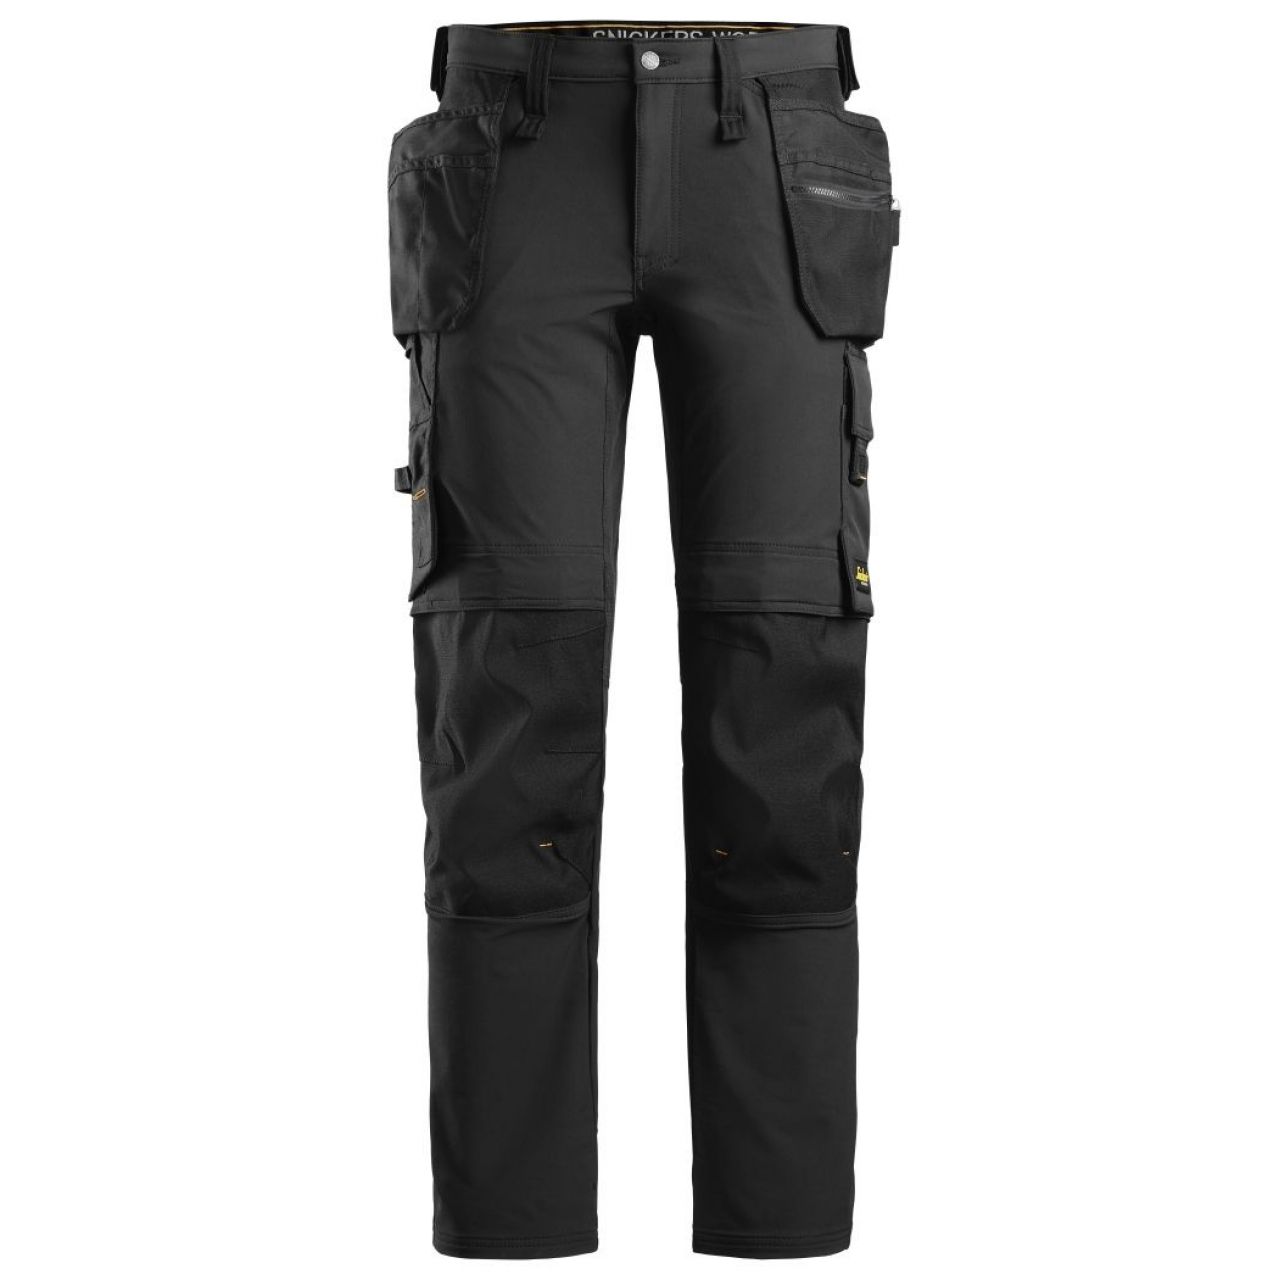 Pantalon elastico AllroundWork bolsillos flotantes negro talla 120